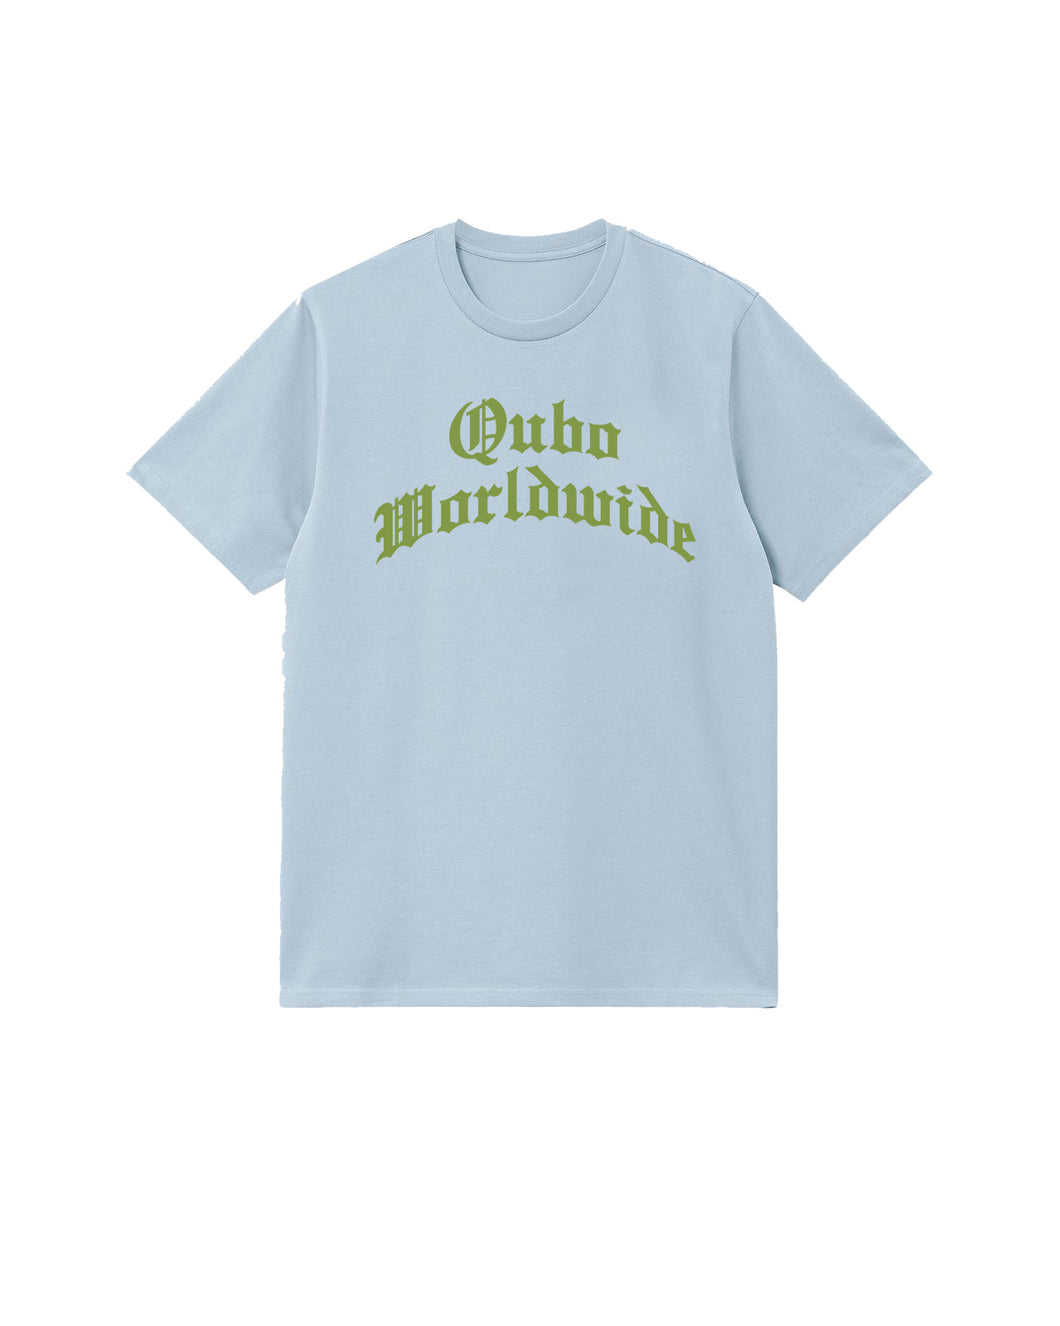 QUBO Worldwide Urban T-shirt (NEW)